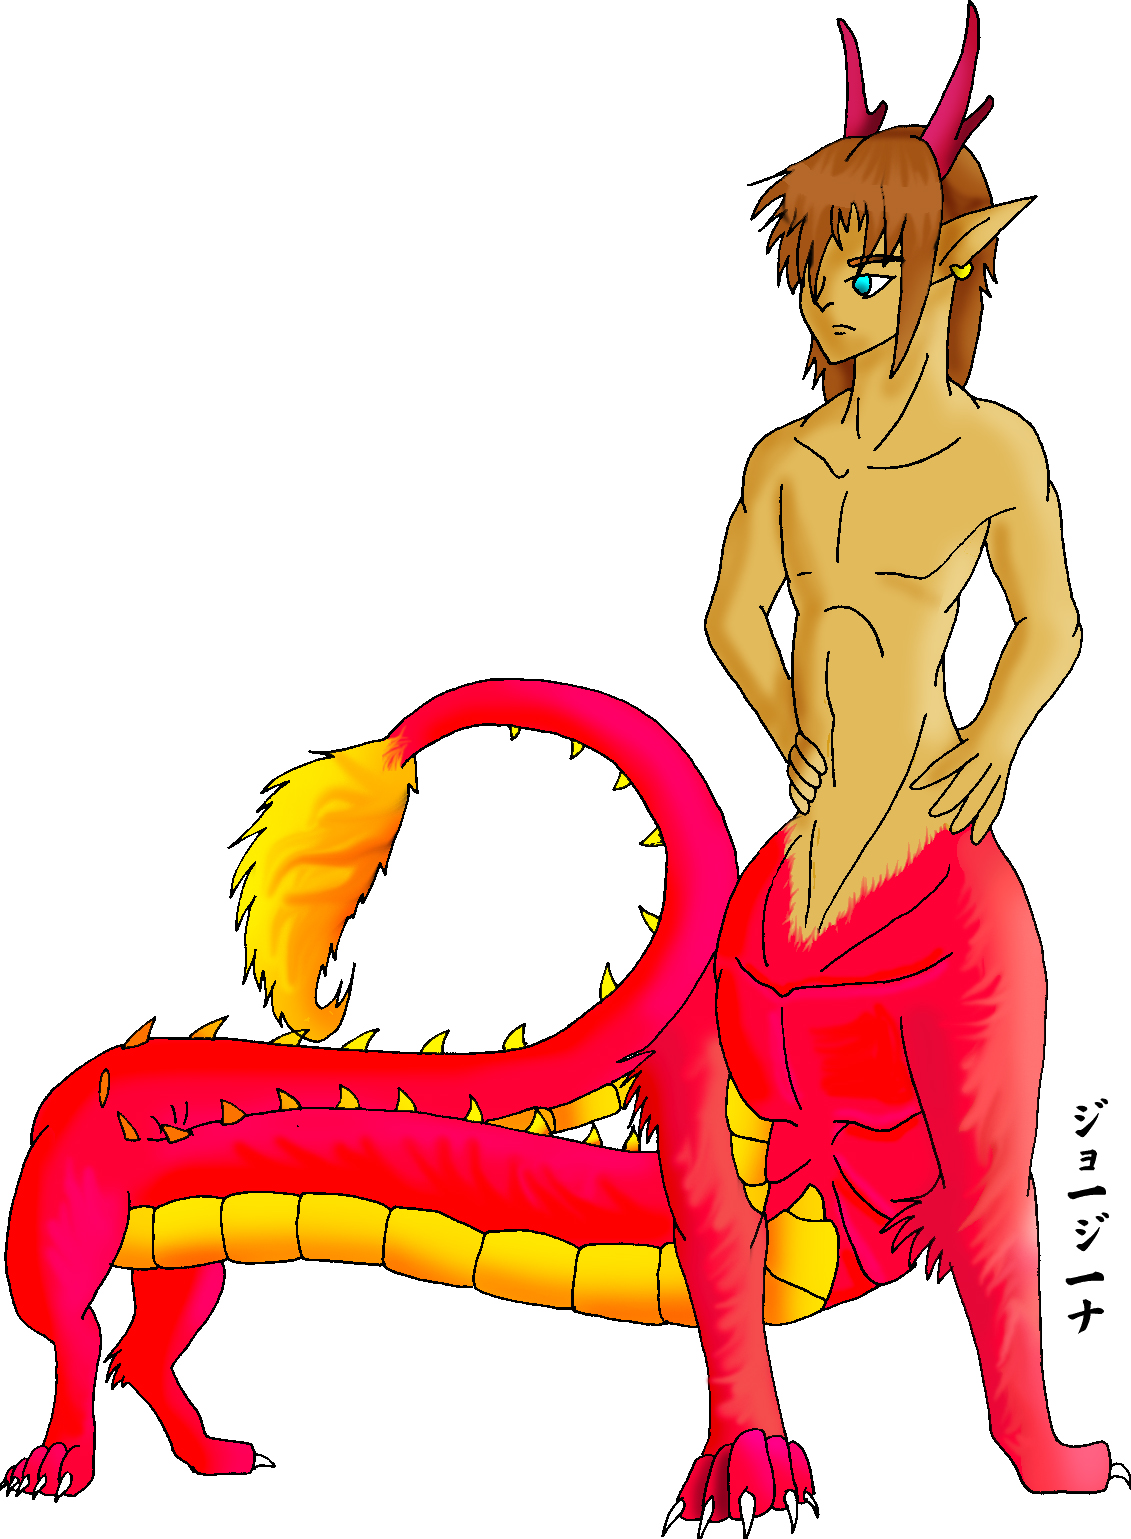 Dragon-taur by Chickibo